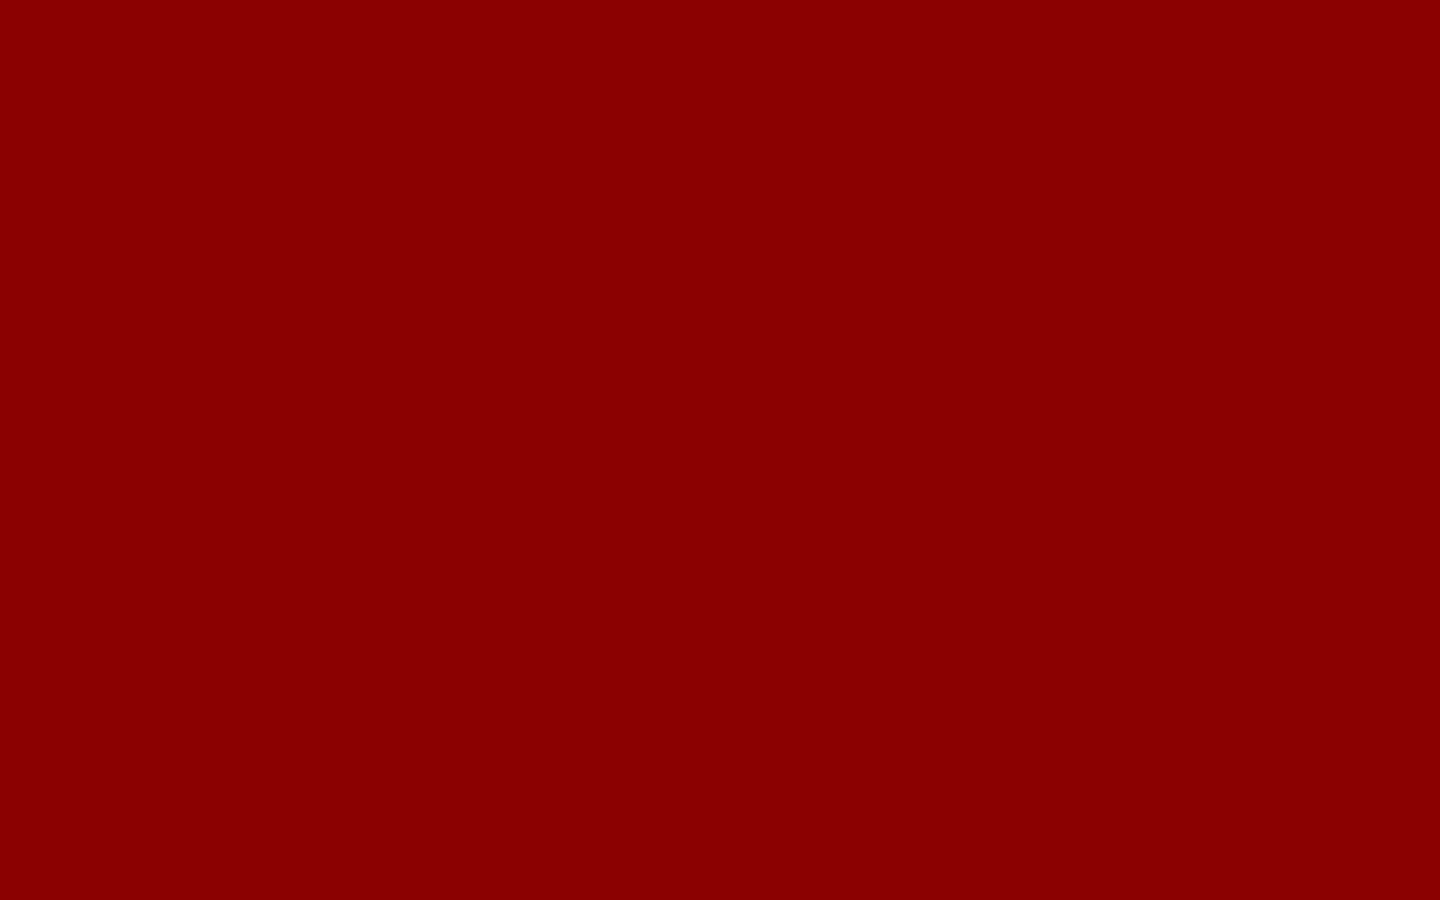 Dark Red Painting Design